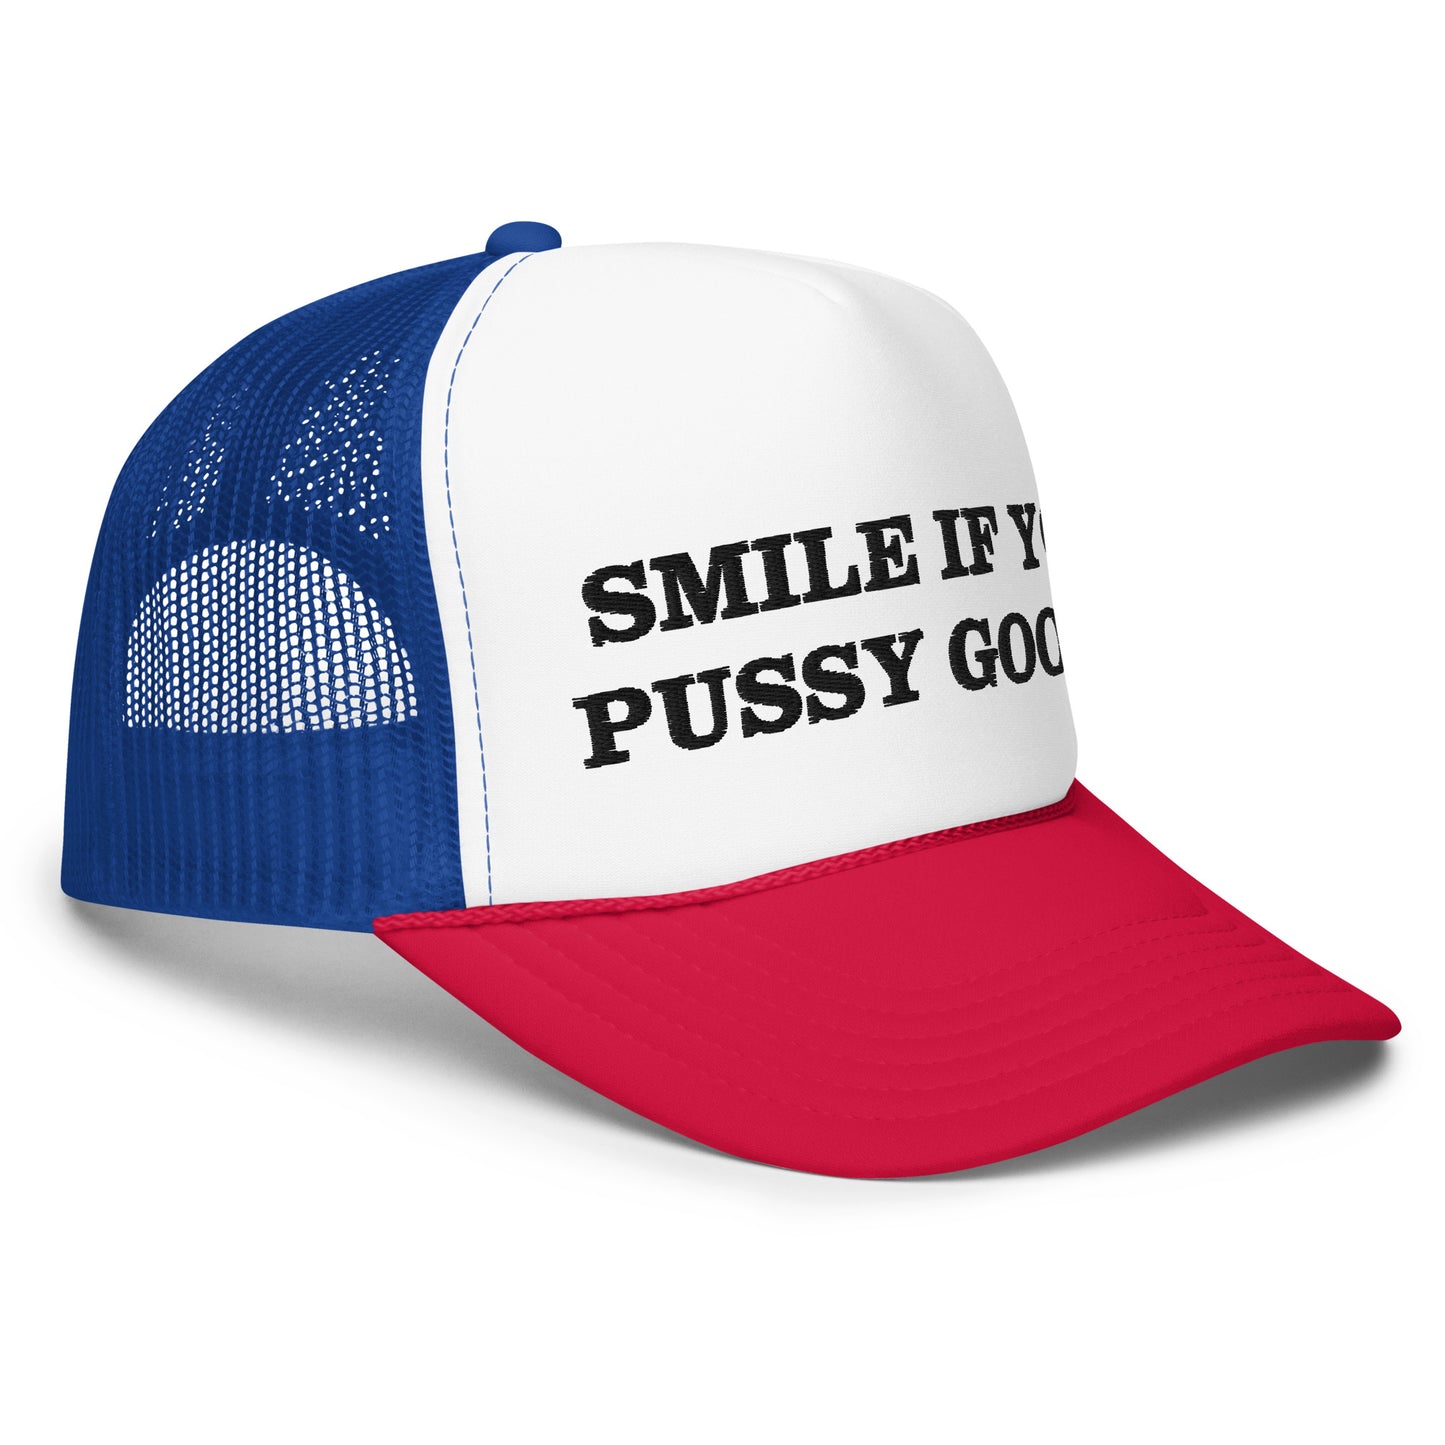 if yo pussy good hat